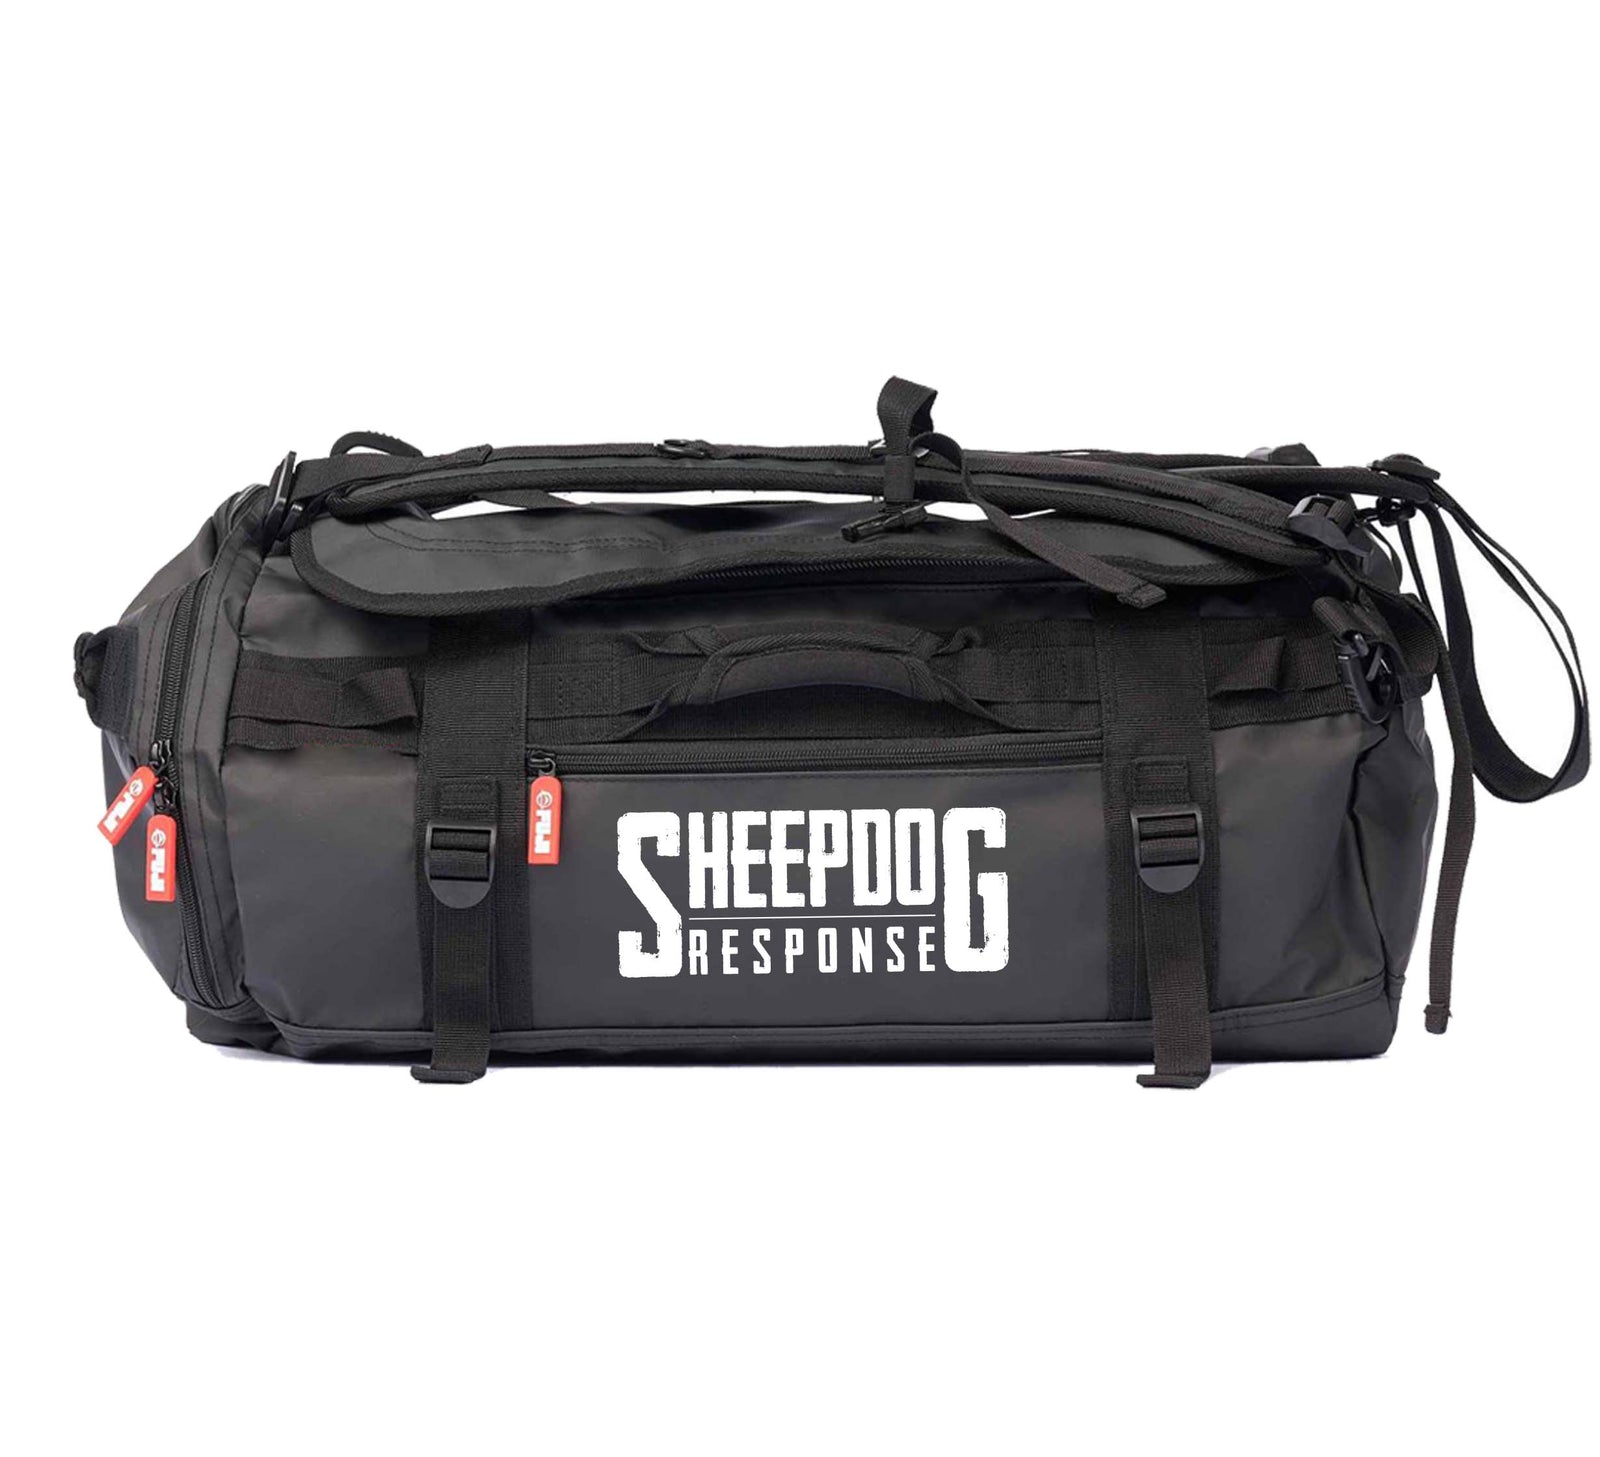 Sheepdog Response Comp Duffle